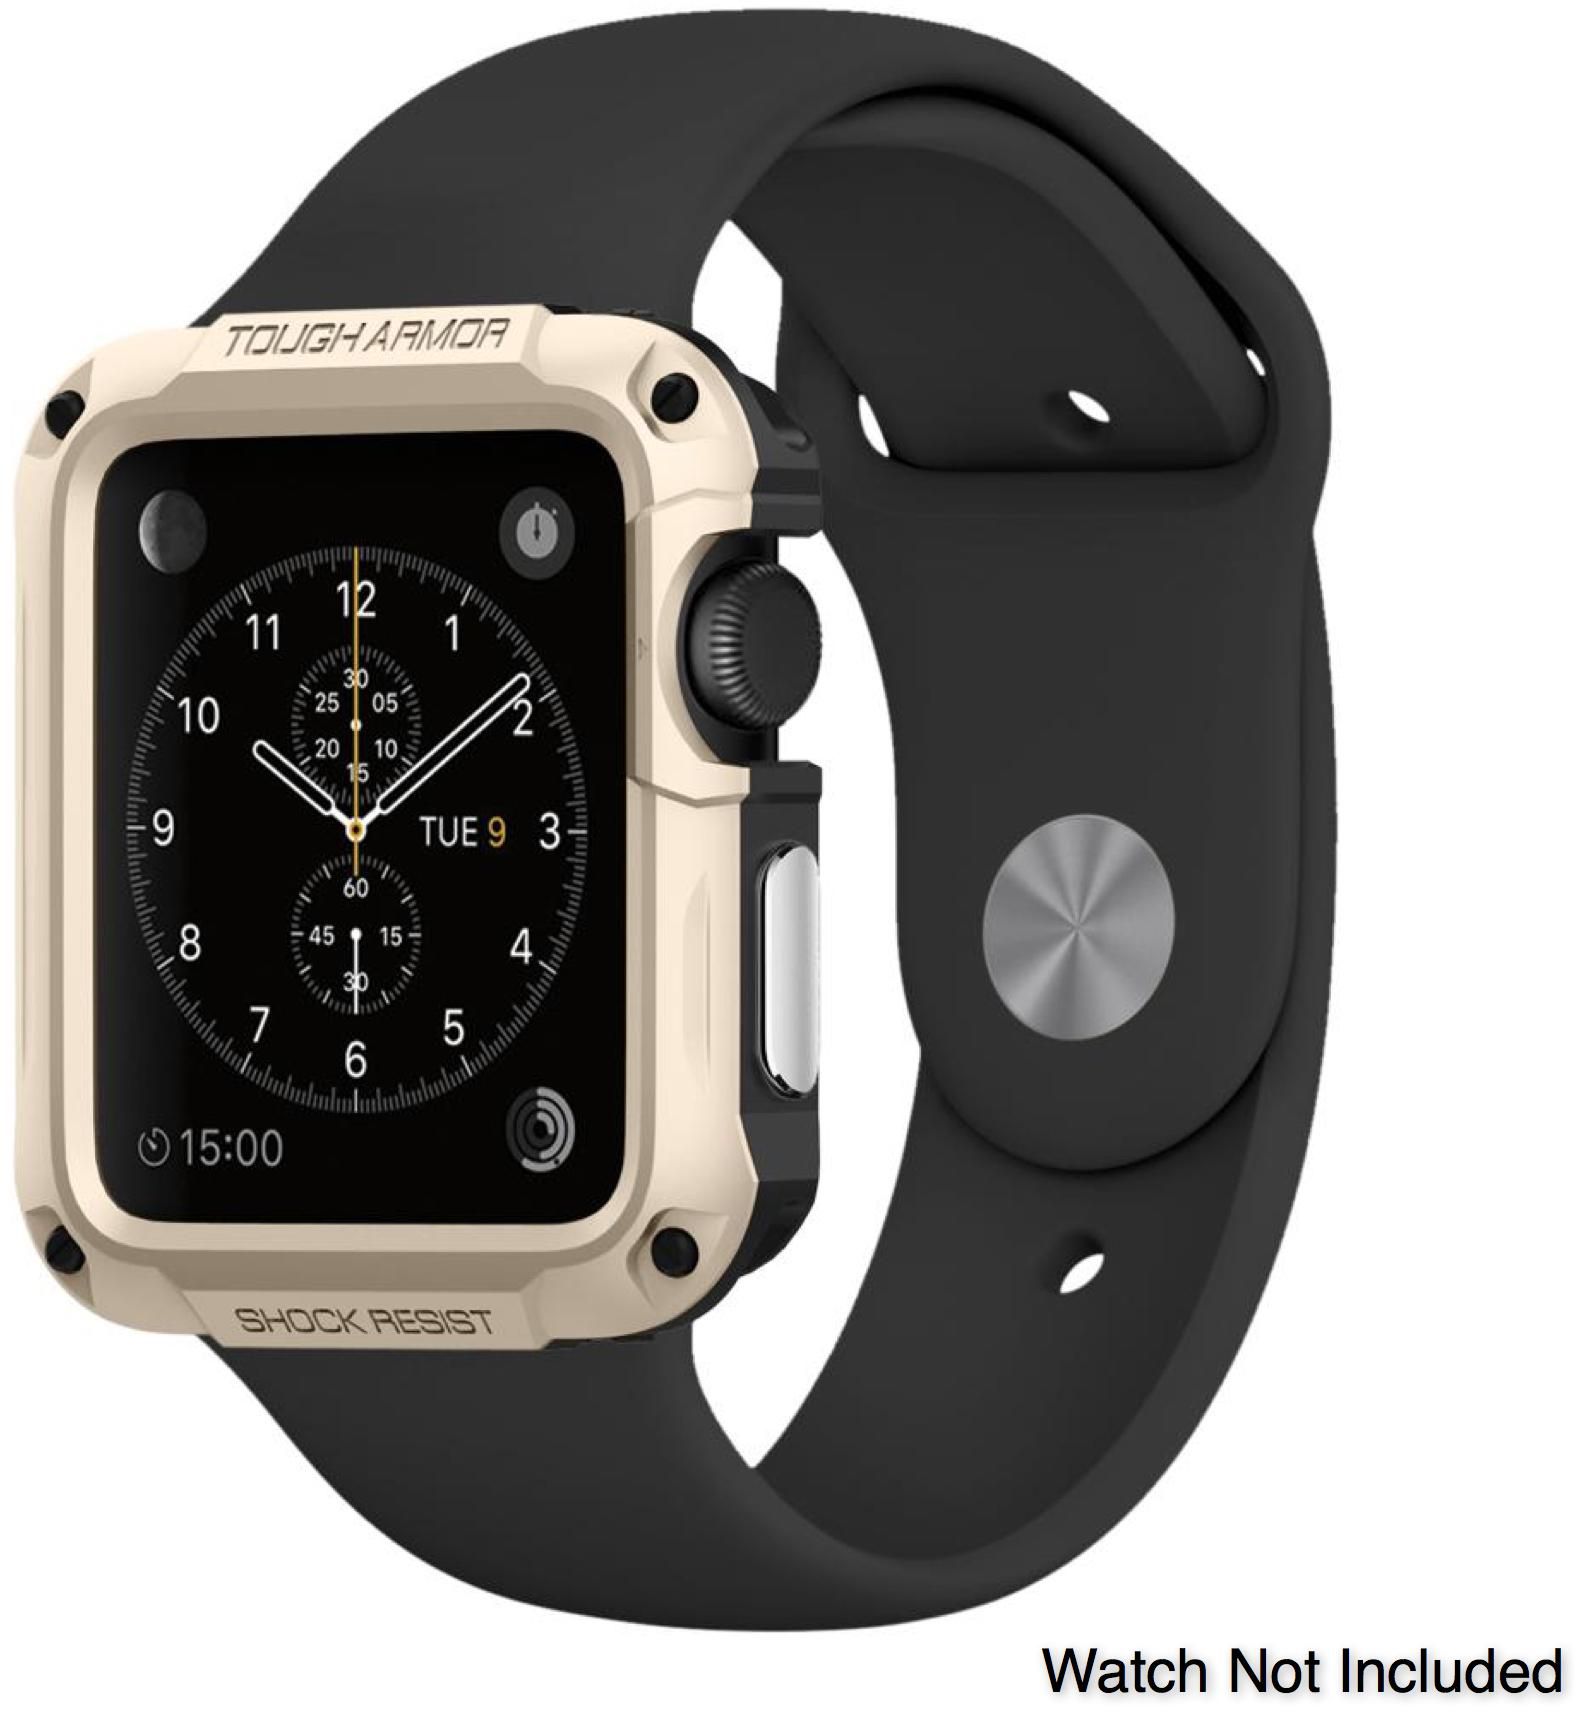 Spigen Tough Armor Protective Case for Apple Watch Series 3/2 (42mm)